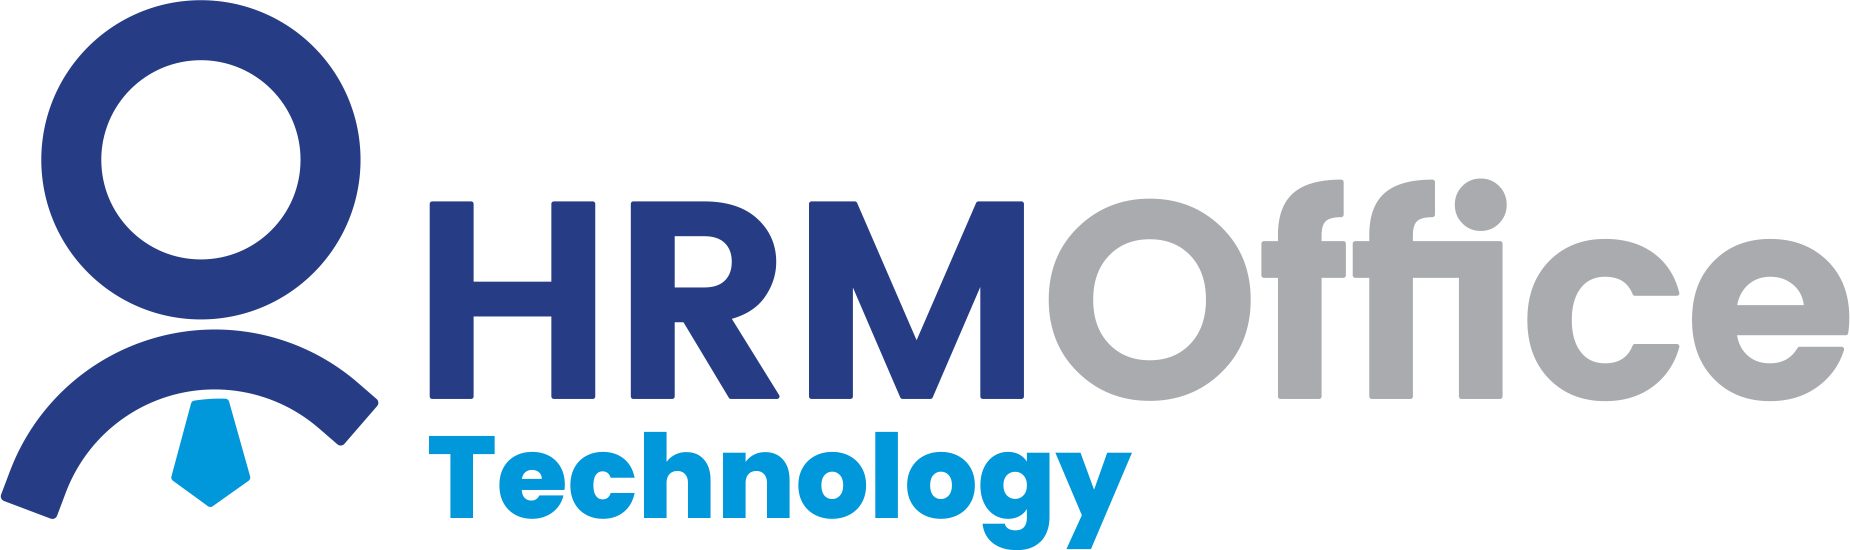 HRMOffice Technology